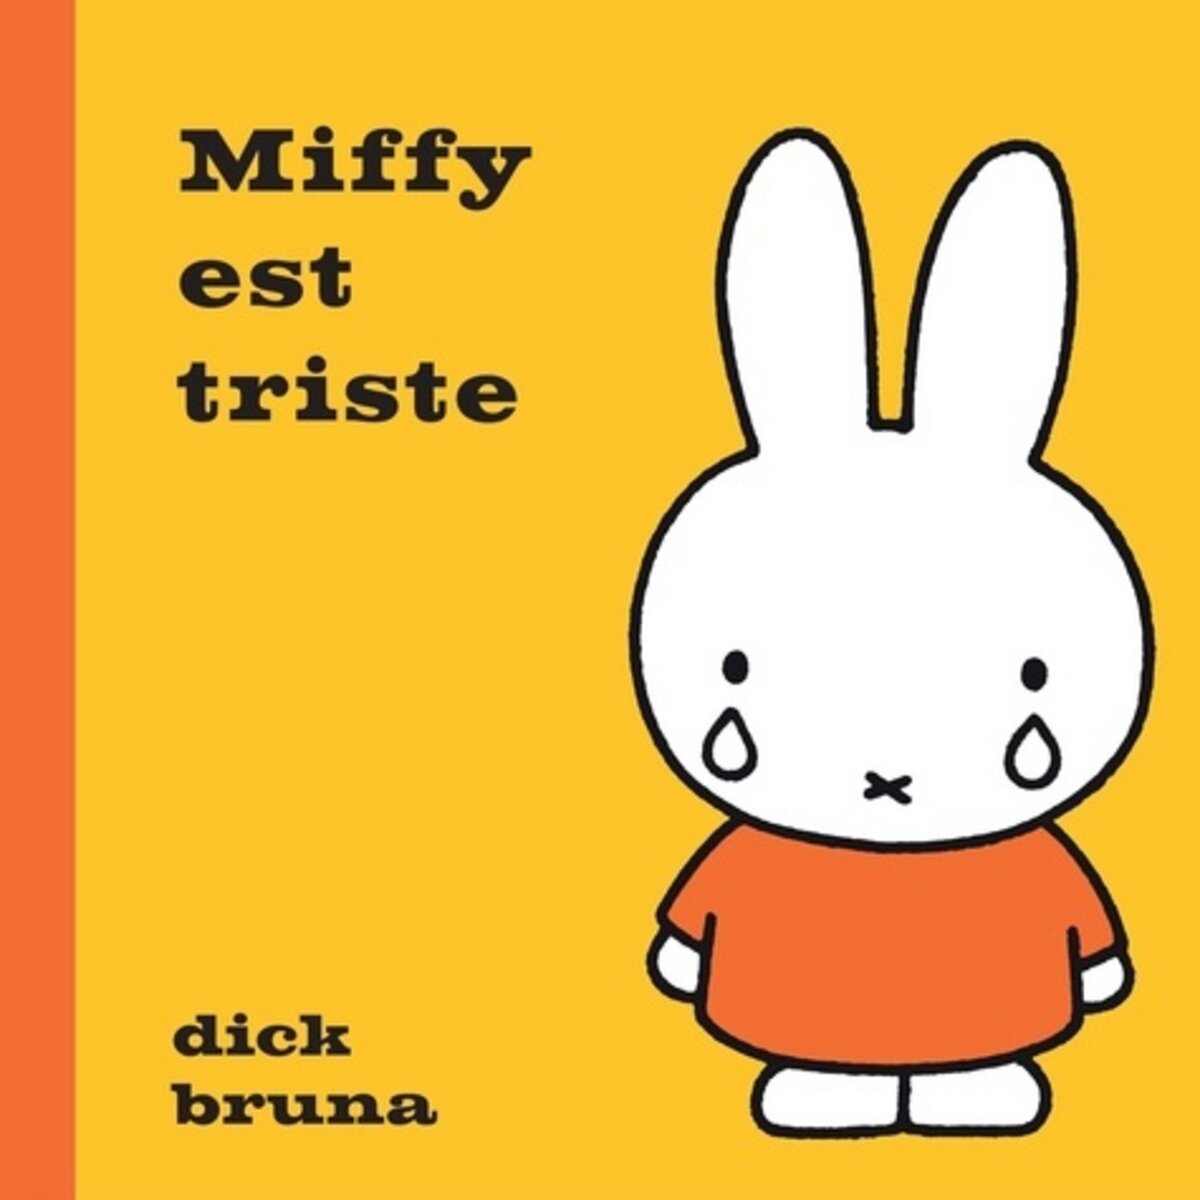 Album Le jardin de Miffy